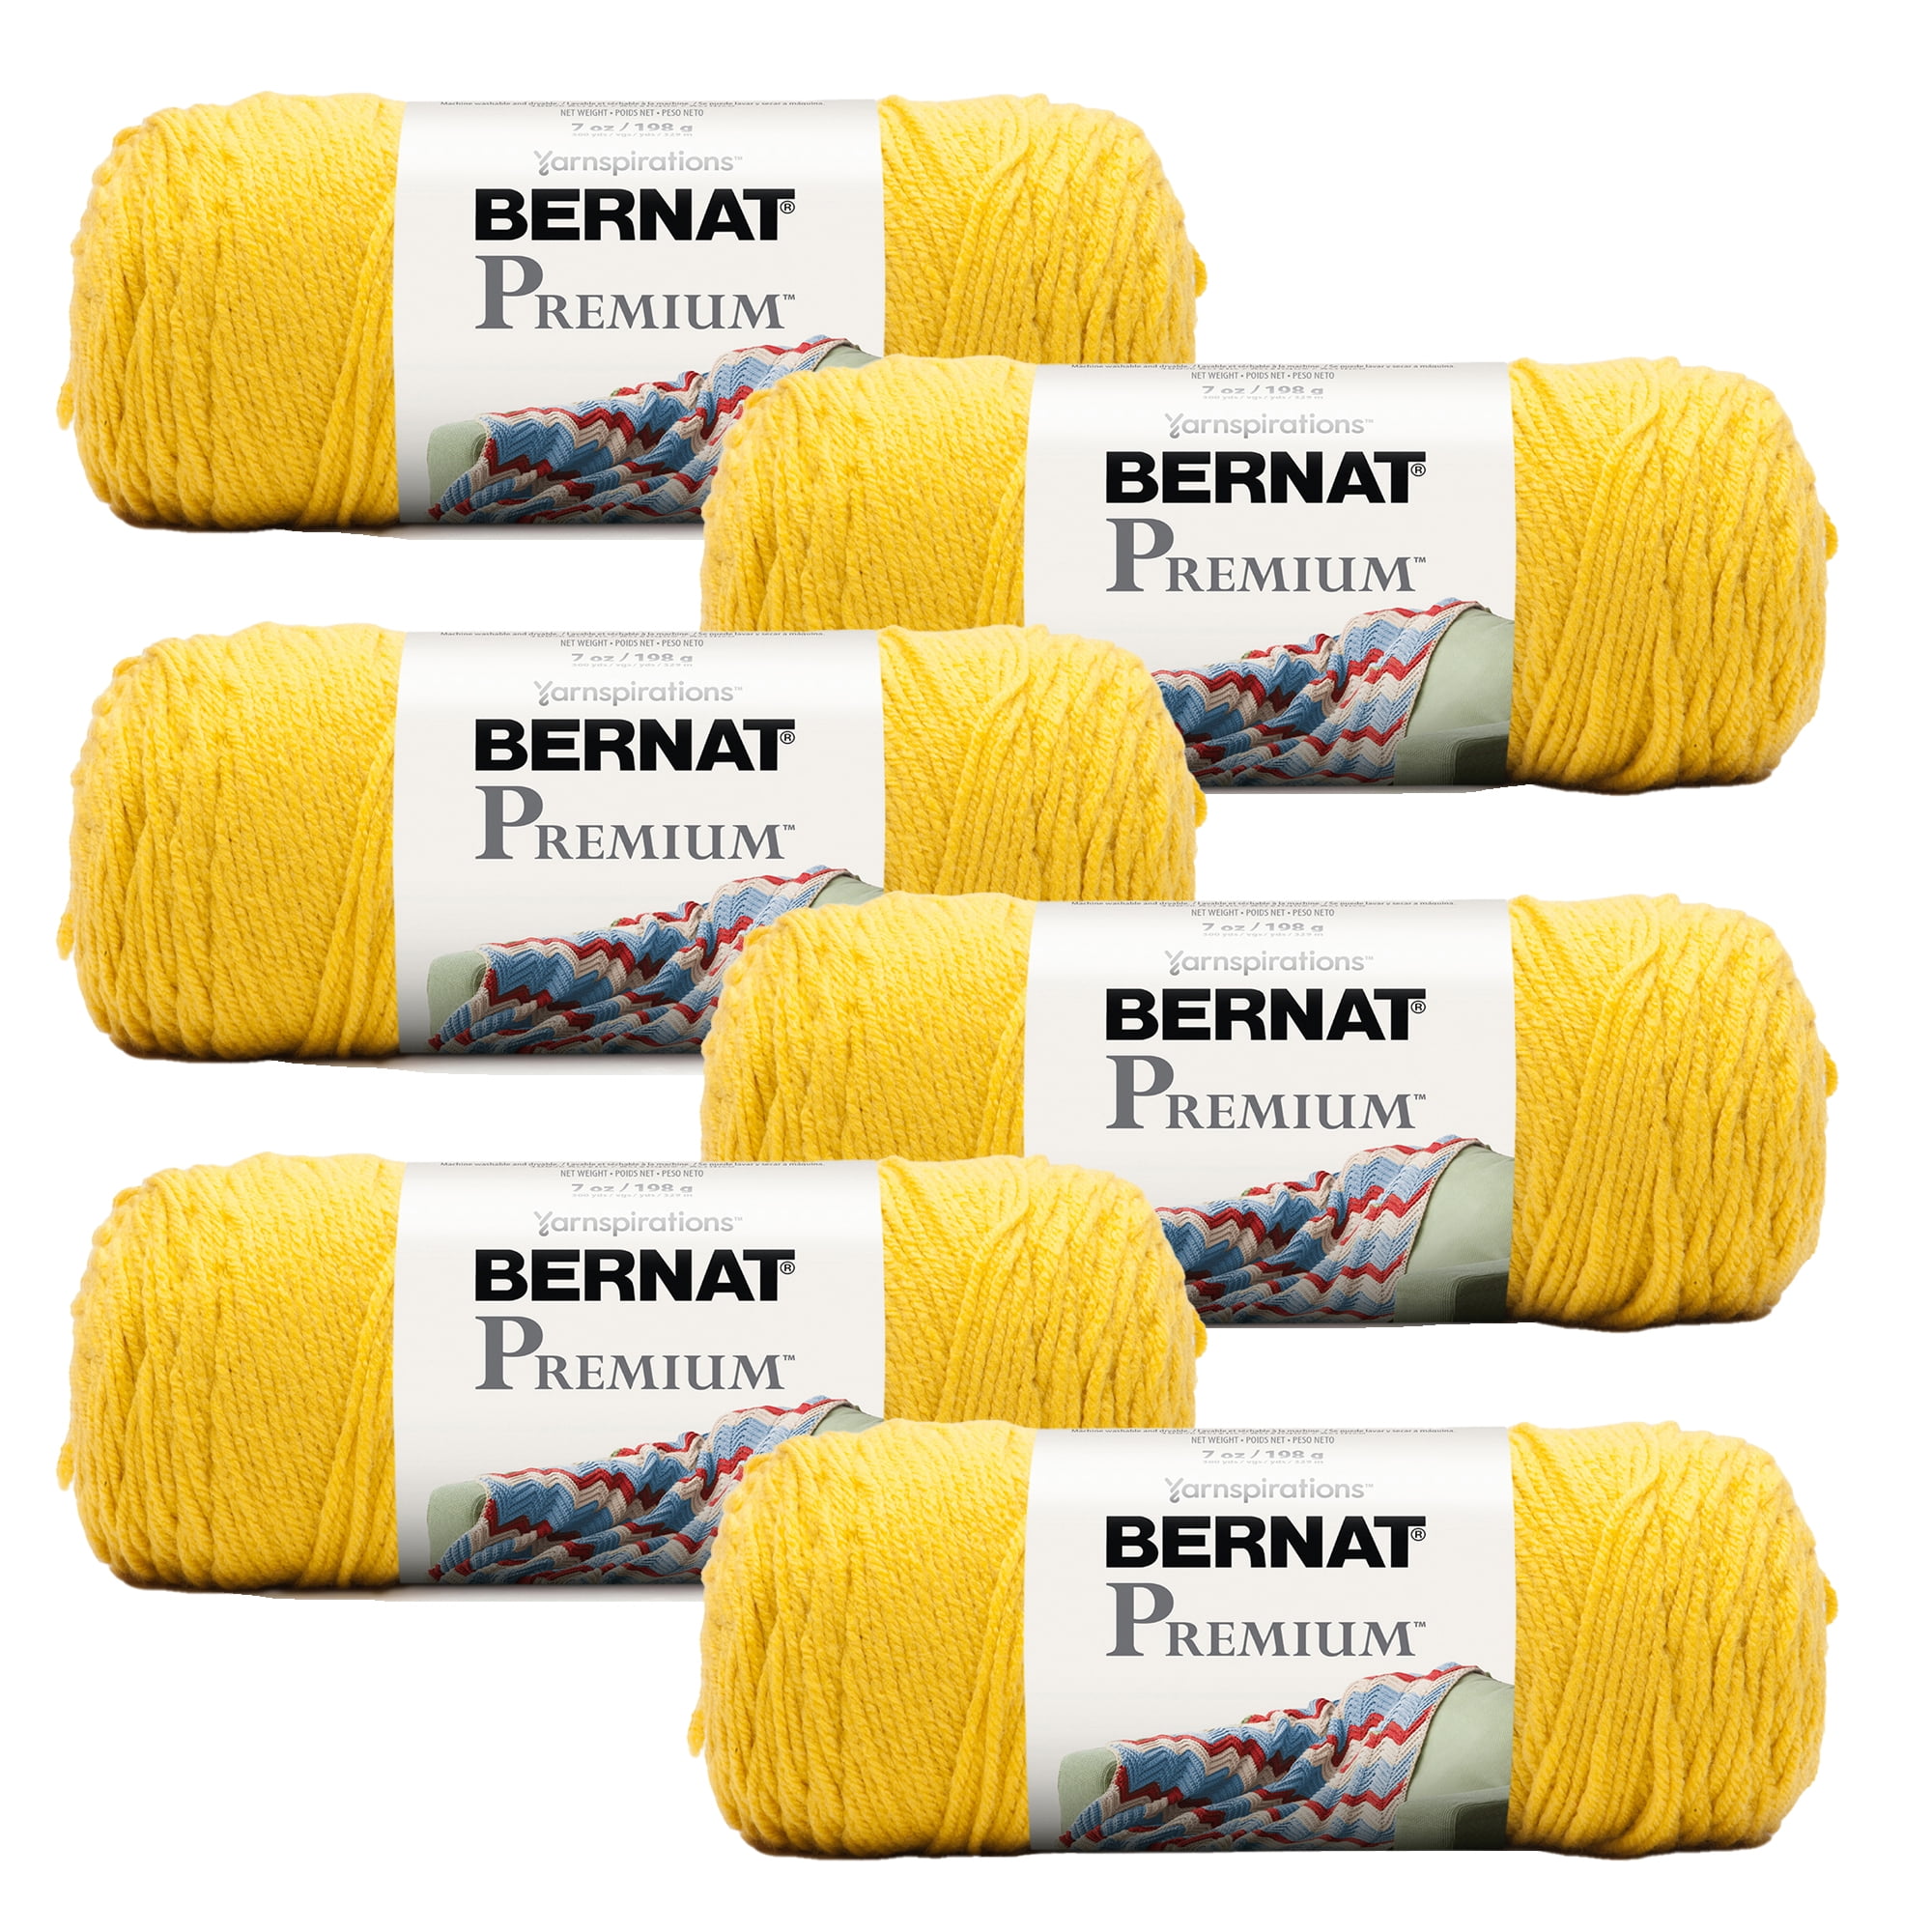 Bernat Super Value Black Yarn - 3 Pack Of 198g/7oz - Acrylic - 4